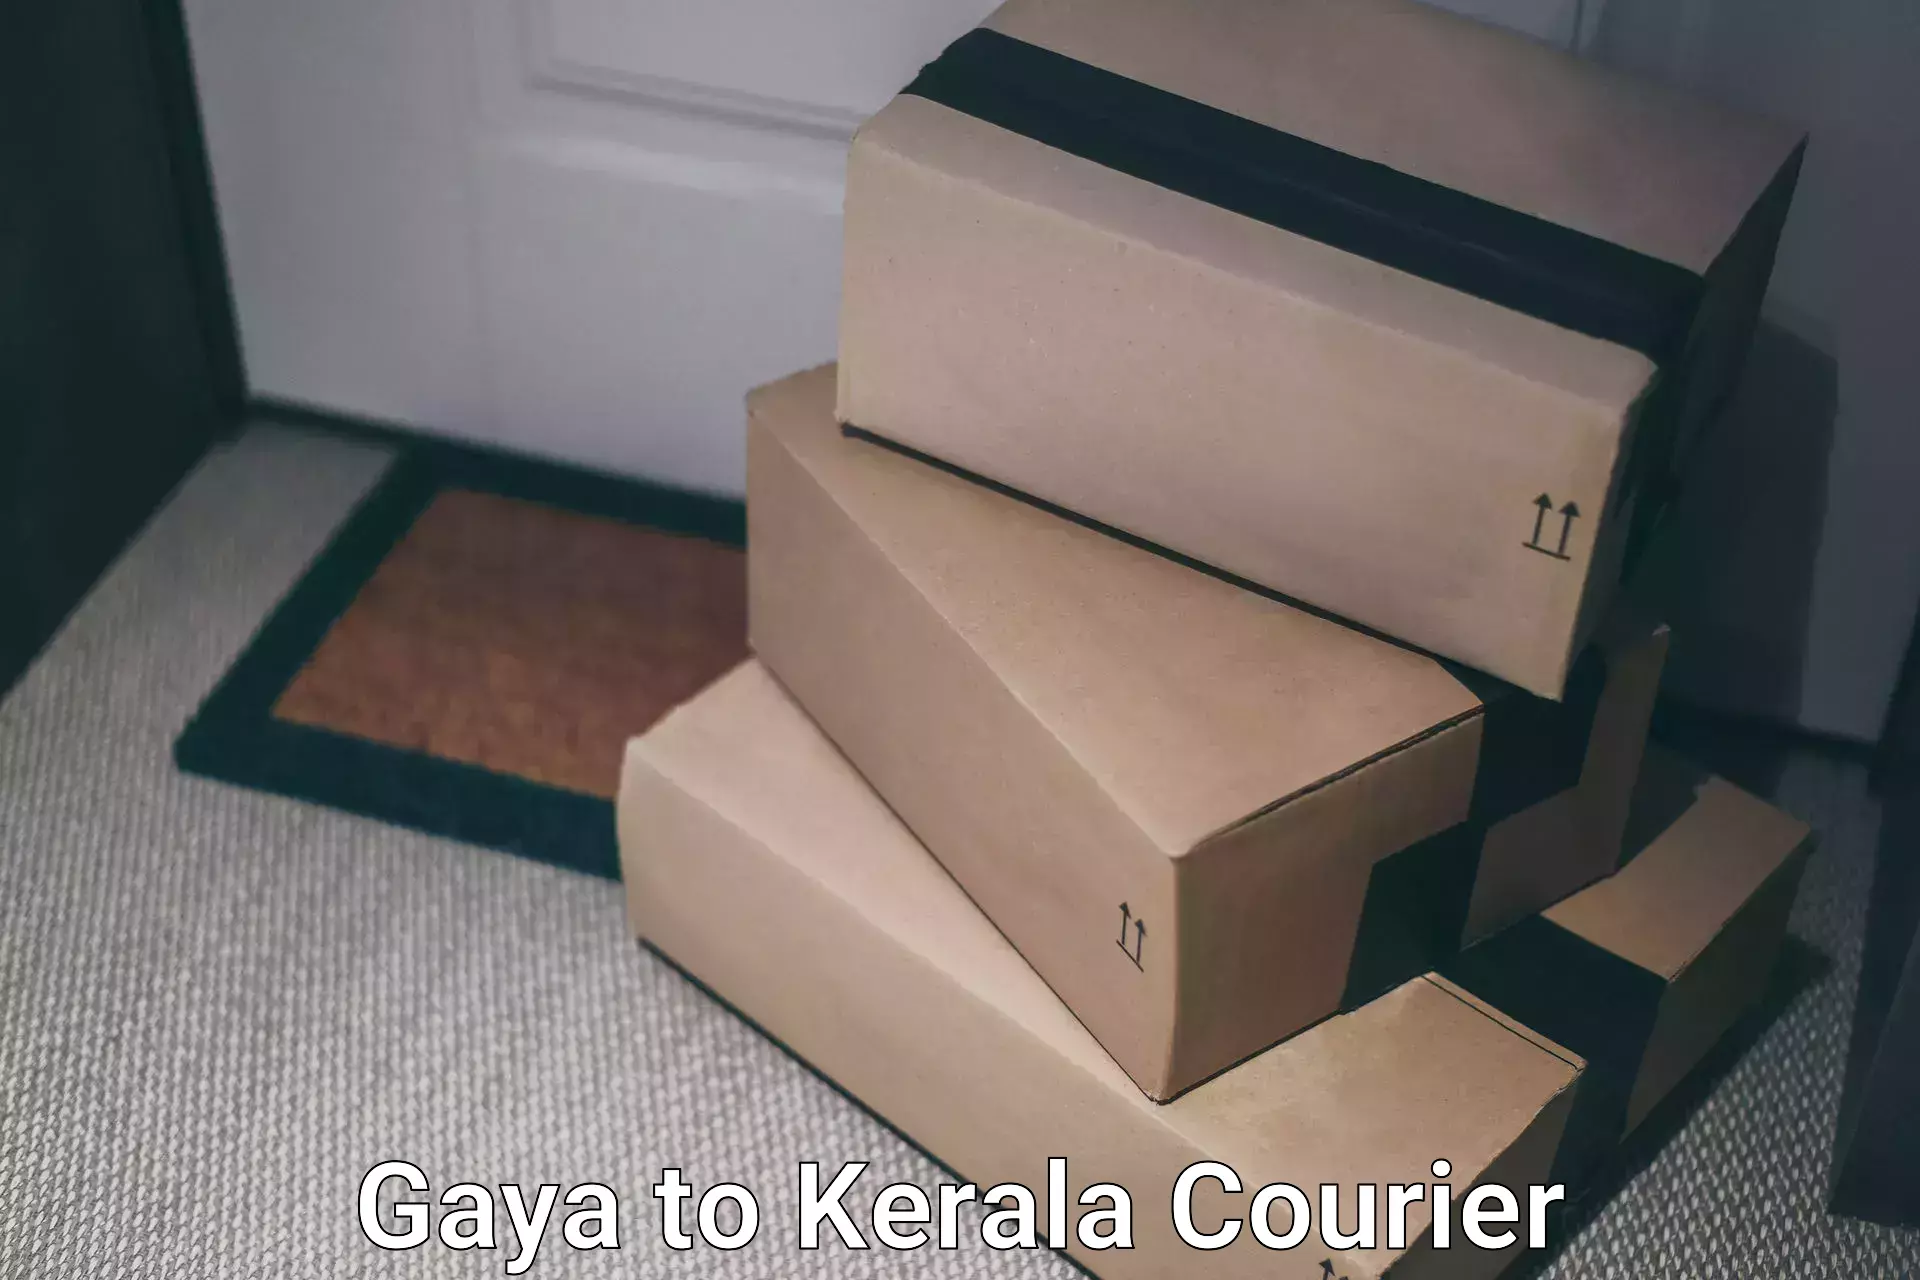 High-priority parcel service Gaya to Kerala